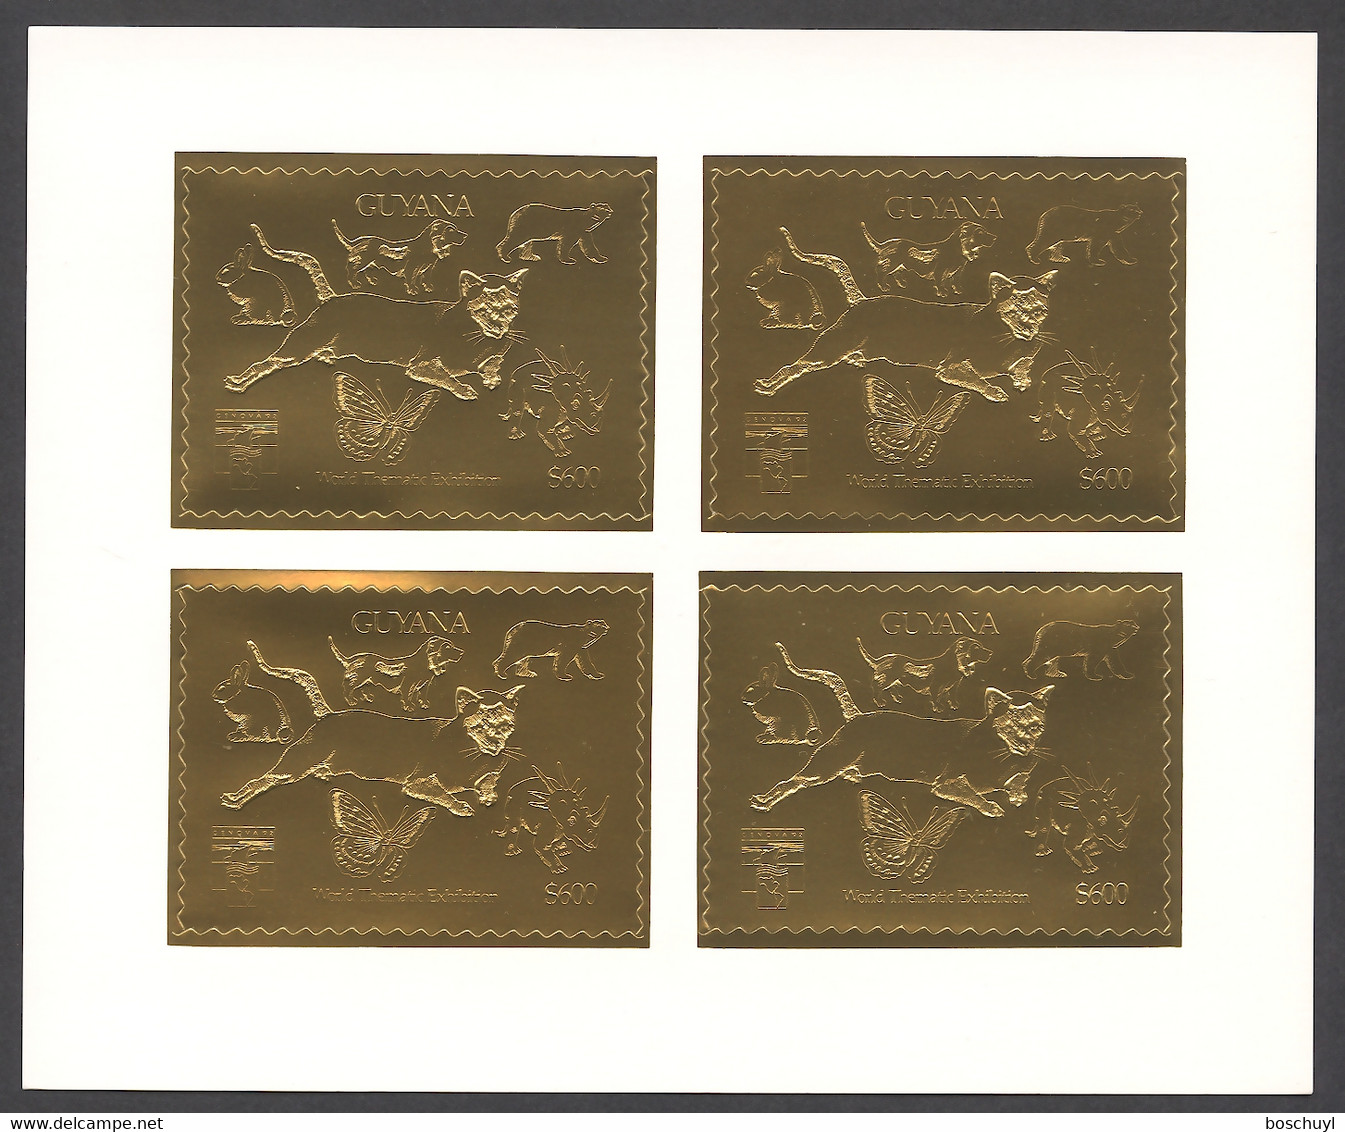 Guyana, 1992, Dog, Bear, Rabbit, Cougar, Butterfly, Dinosaur, Genova, Gold, MNH Perforated Sheetlet, Michel 3978BA - Guyana (1966-...)